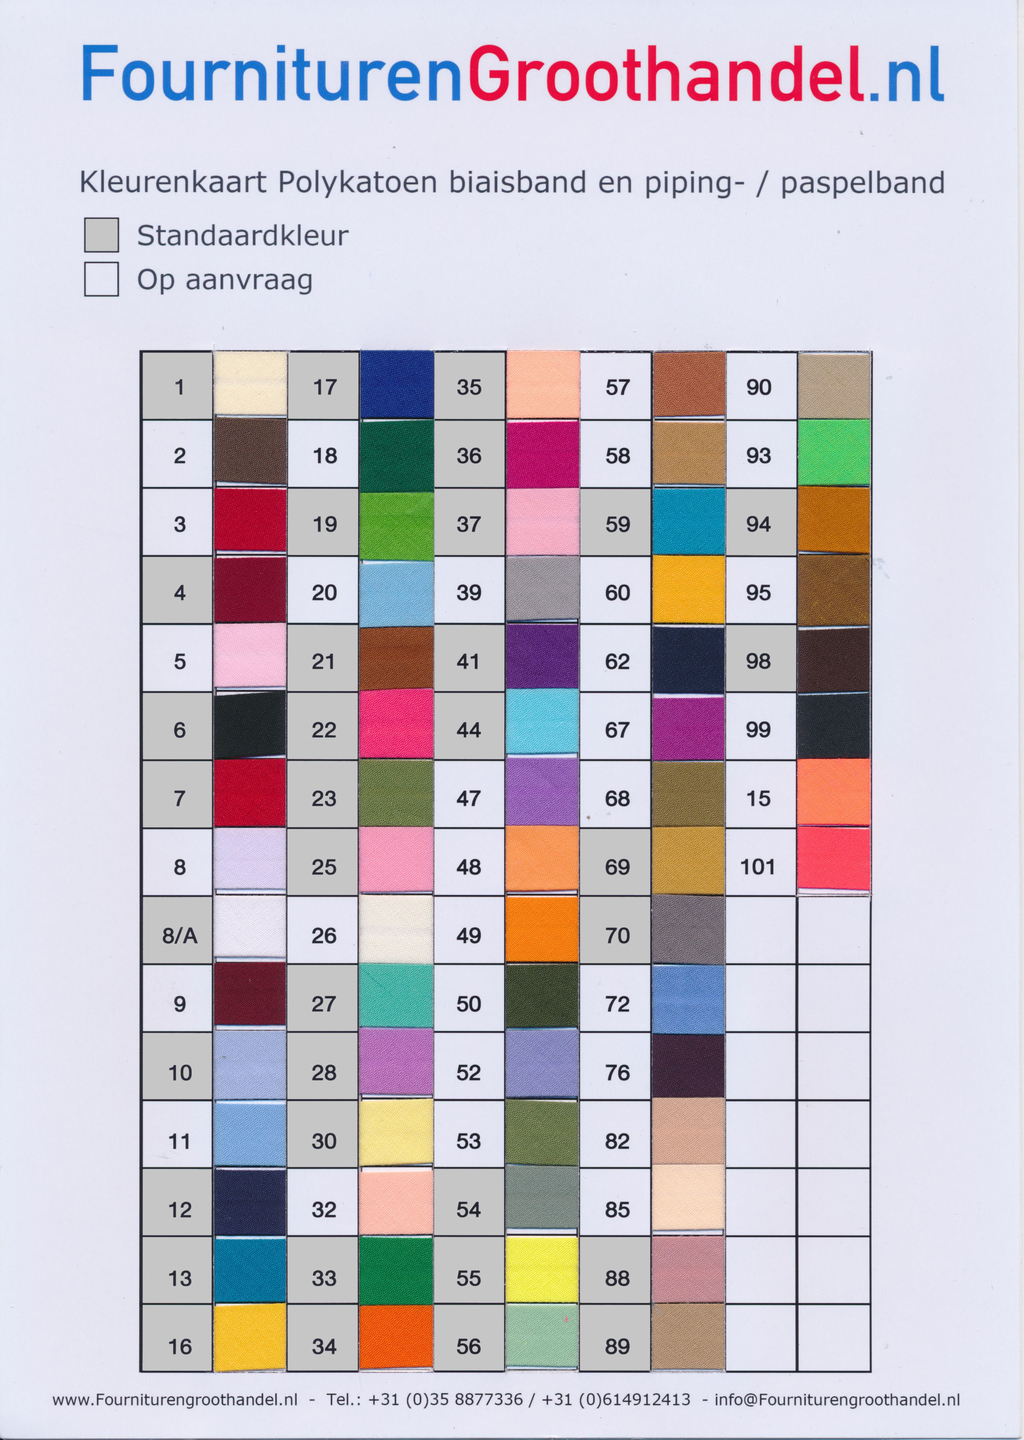 Kleurenkaart Polykatoen biaisband en piping-paspelband